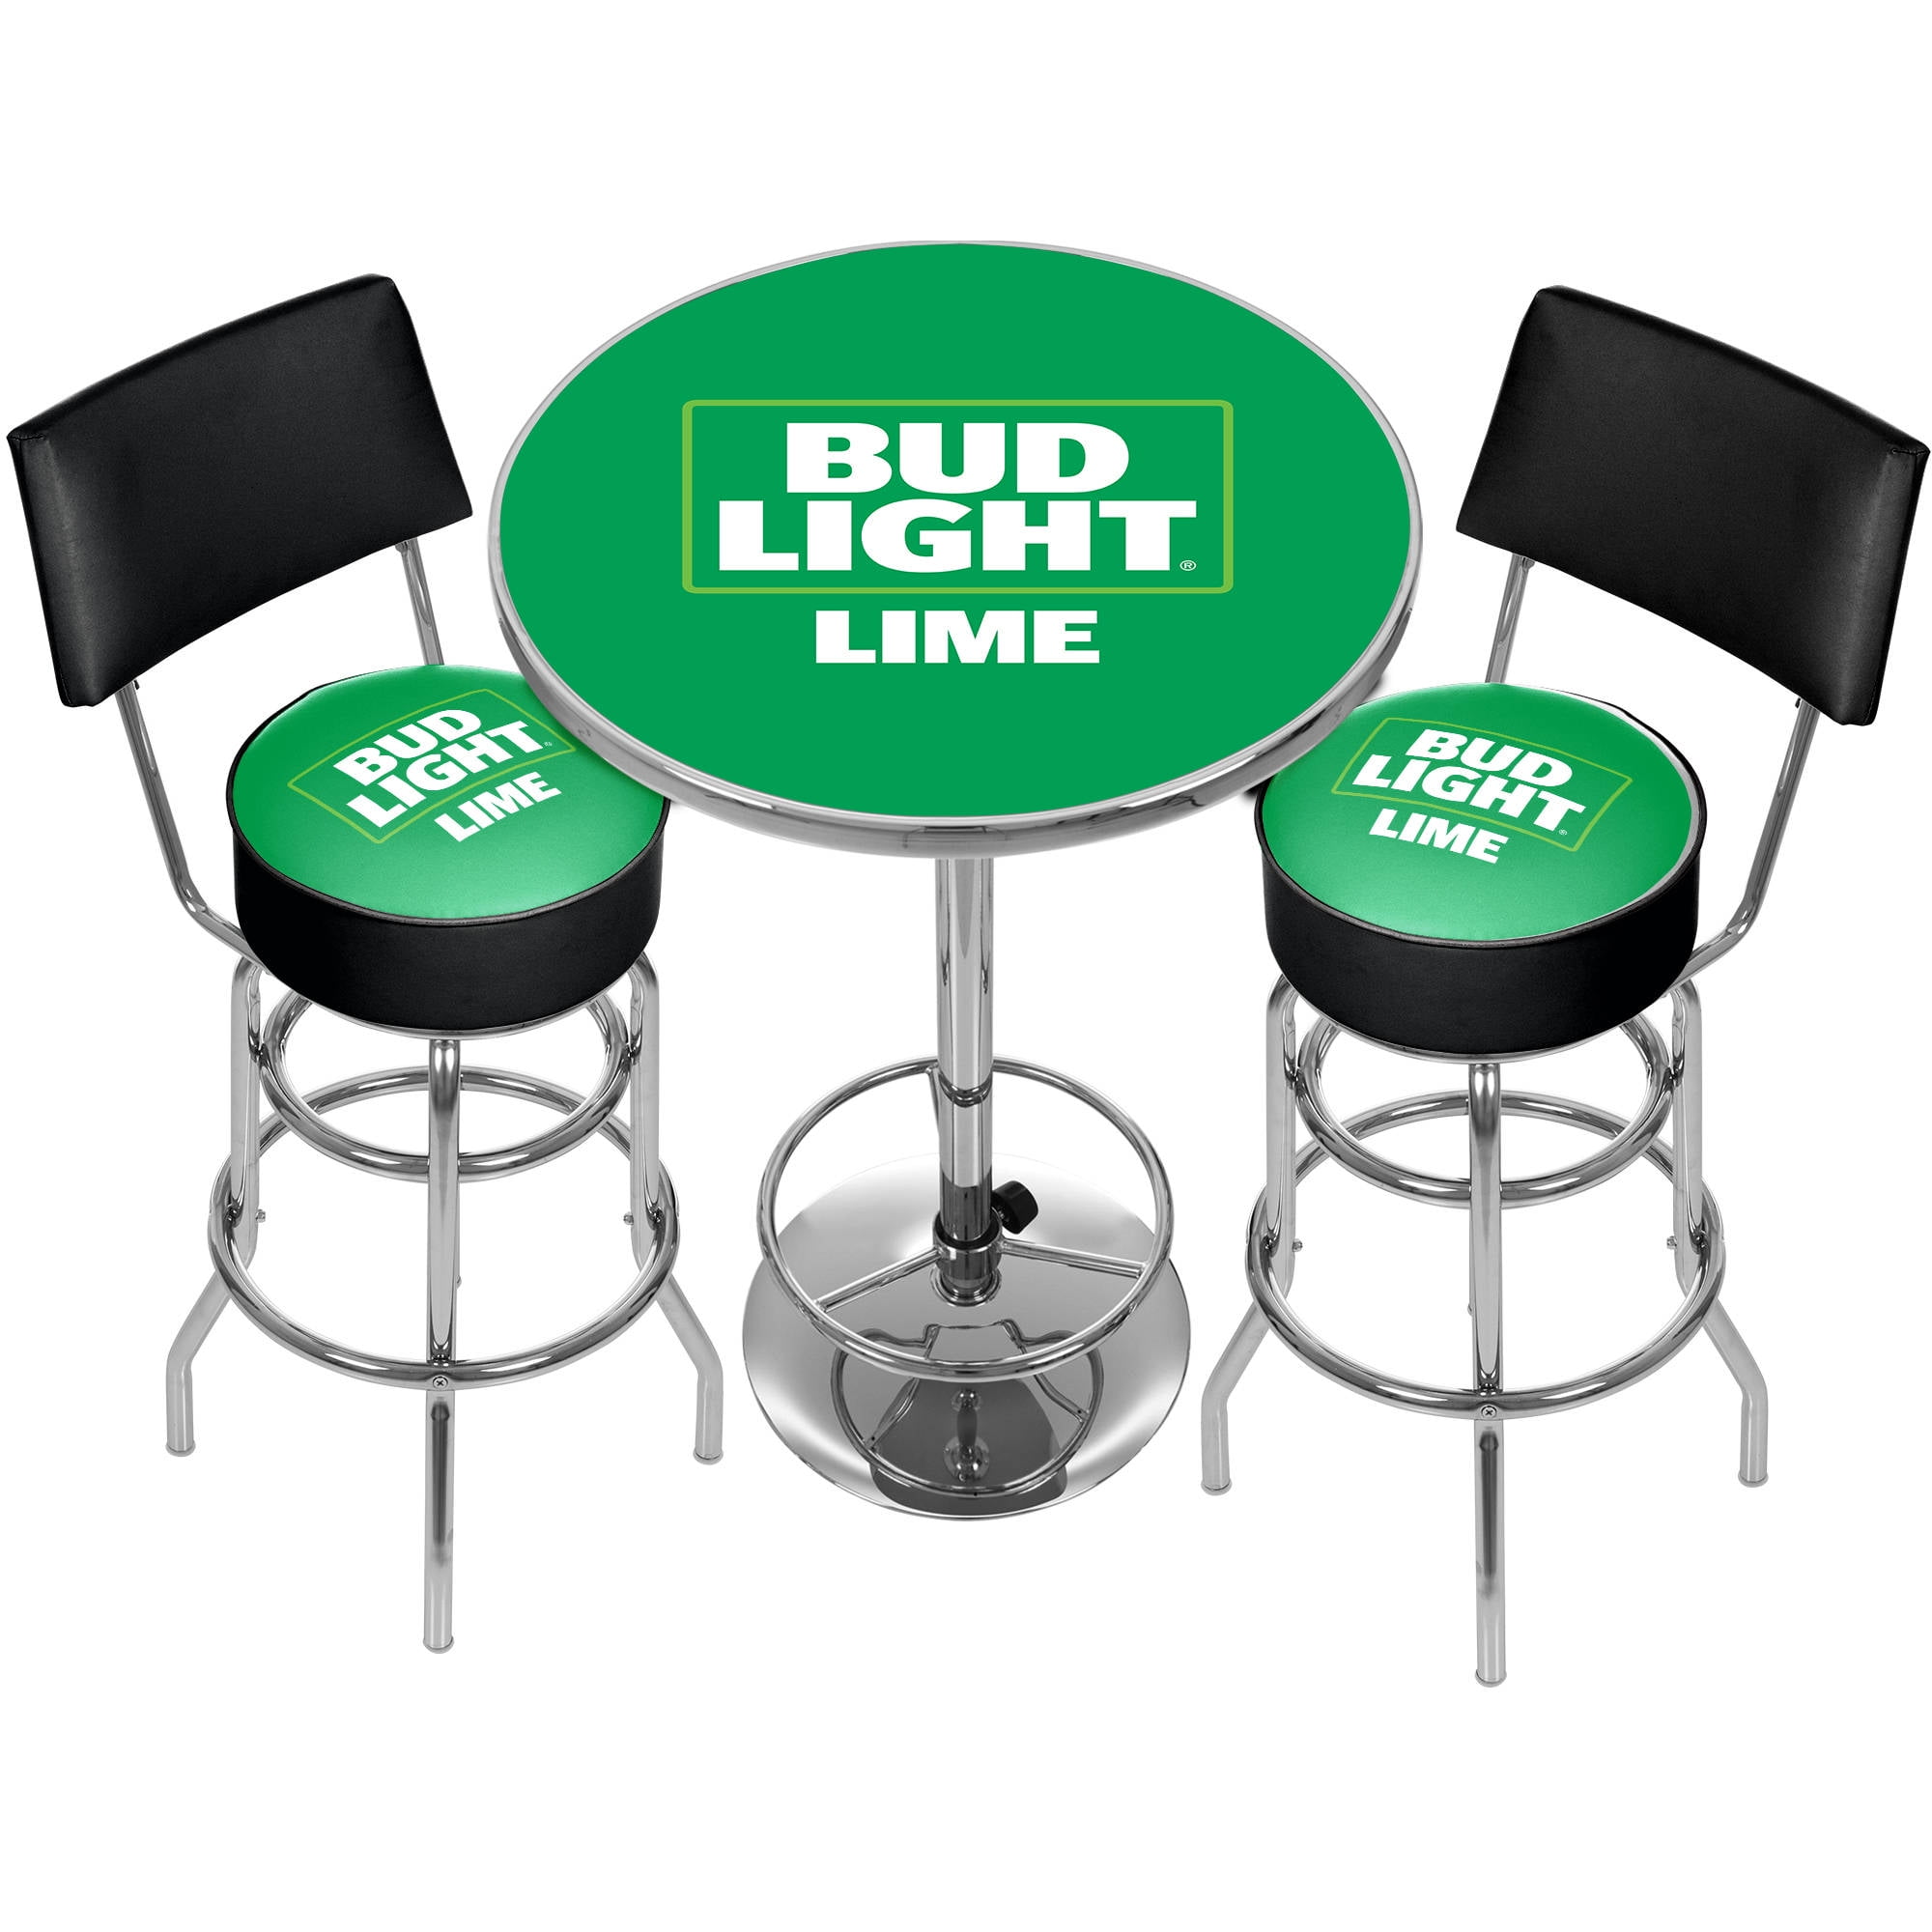 Bud Light Lime Vinyl Decal Sticker Car Cooler Bar Beer Cornhole Board Alcohol